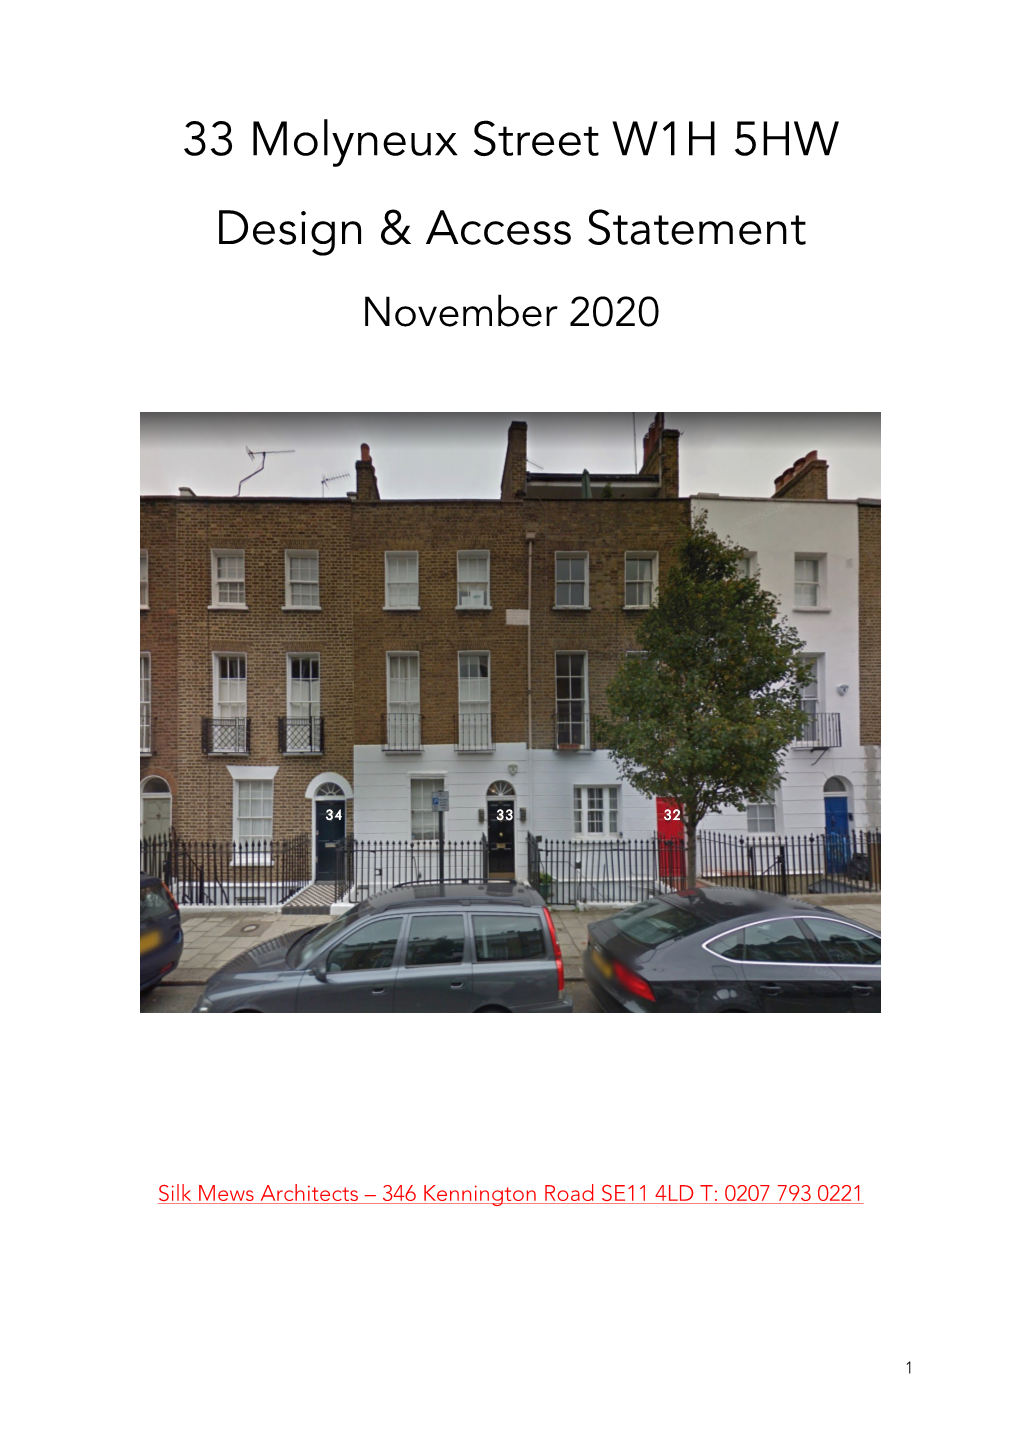 1258 Design & Access Statement